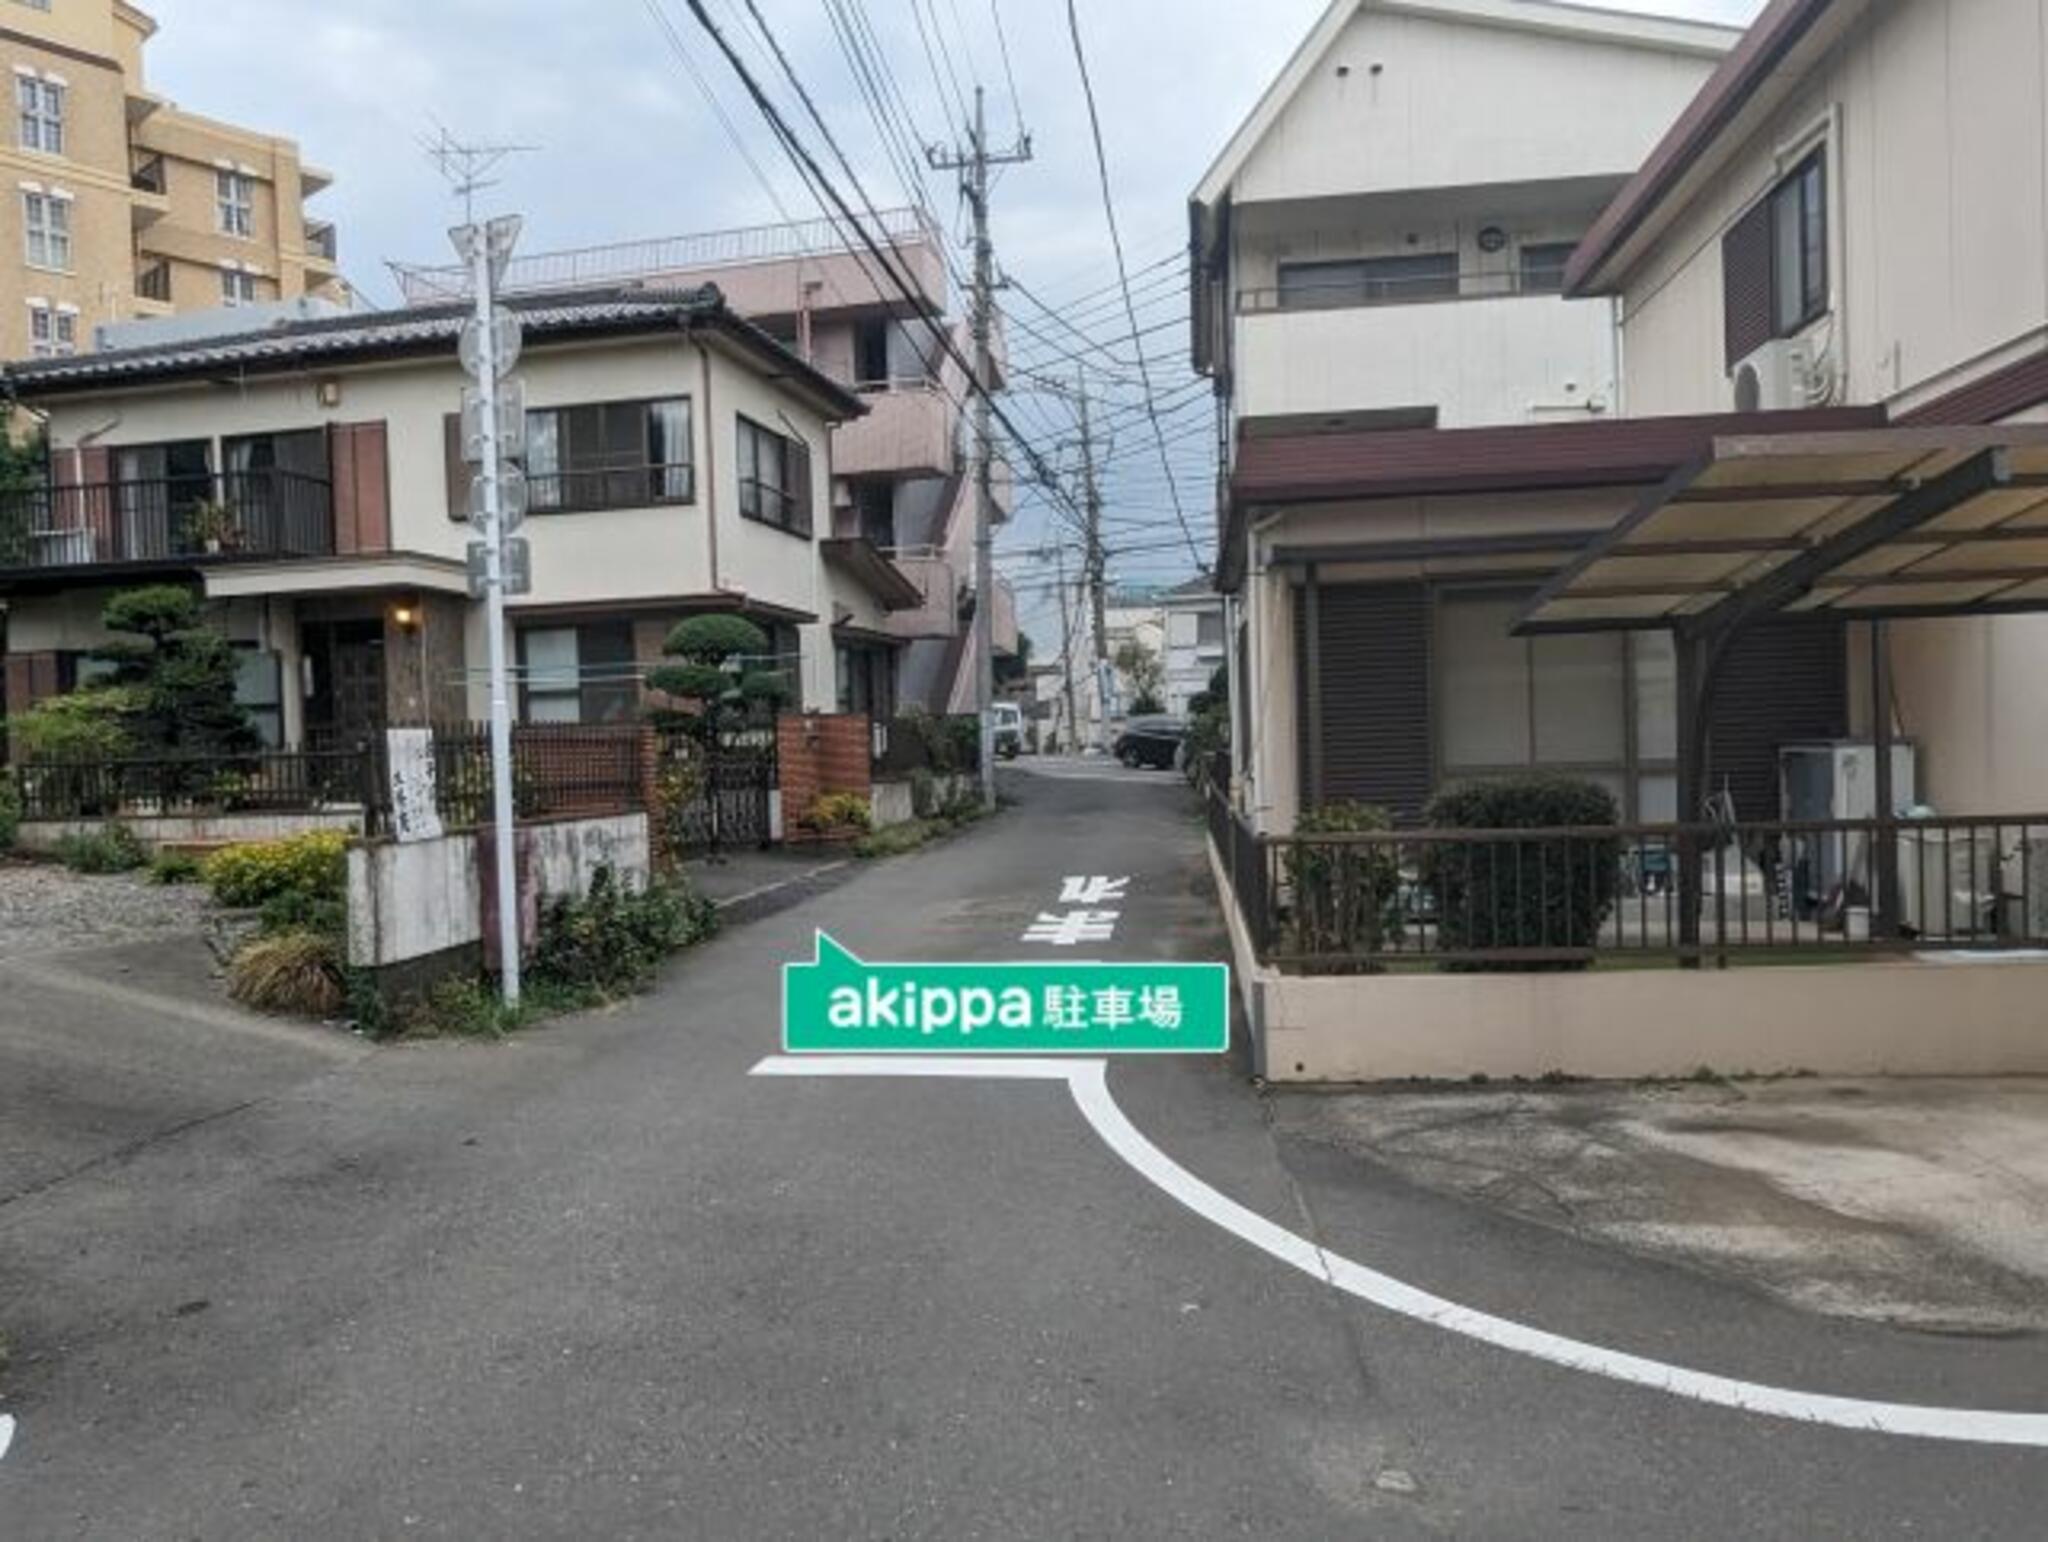 akippa駐車場:東京都八王子市万町86の代表写真5